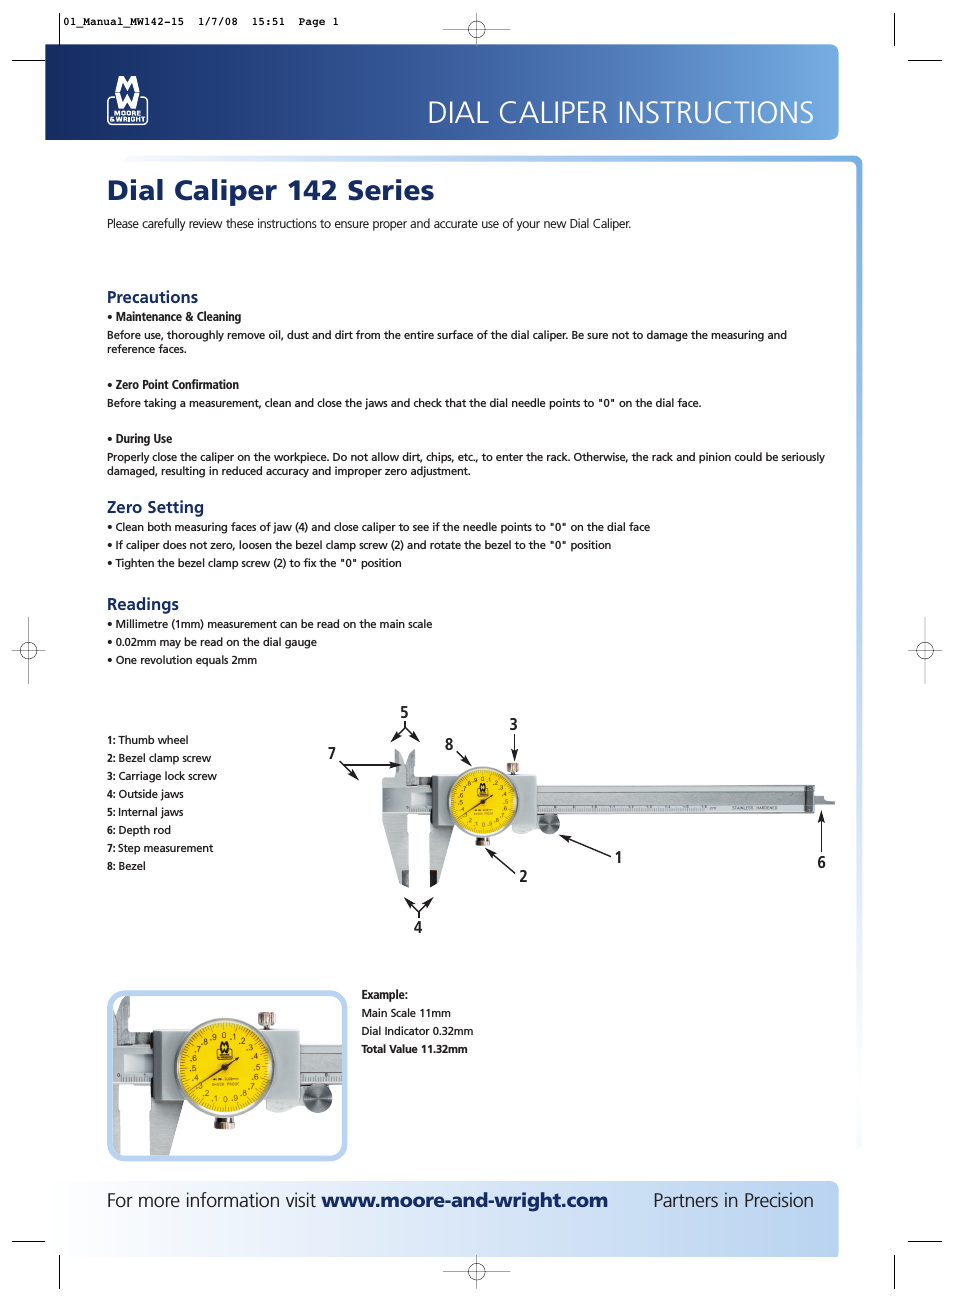 M&W Dial Caliper 142 Series